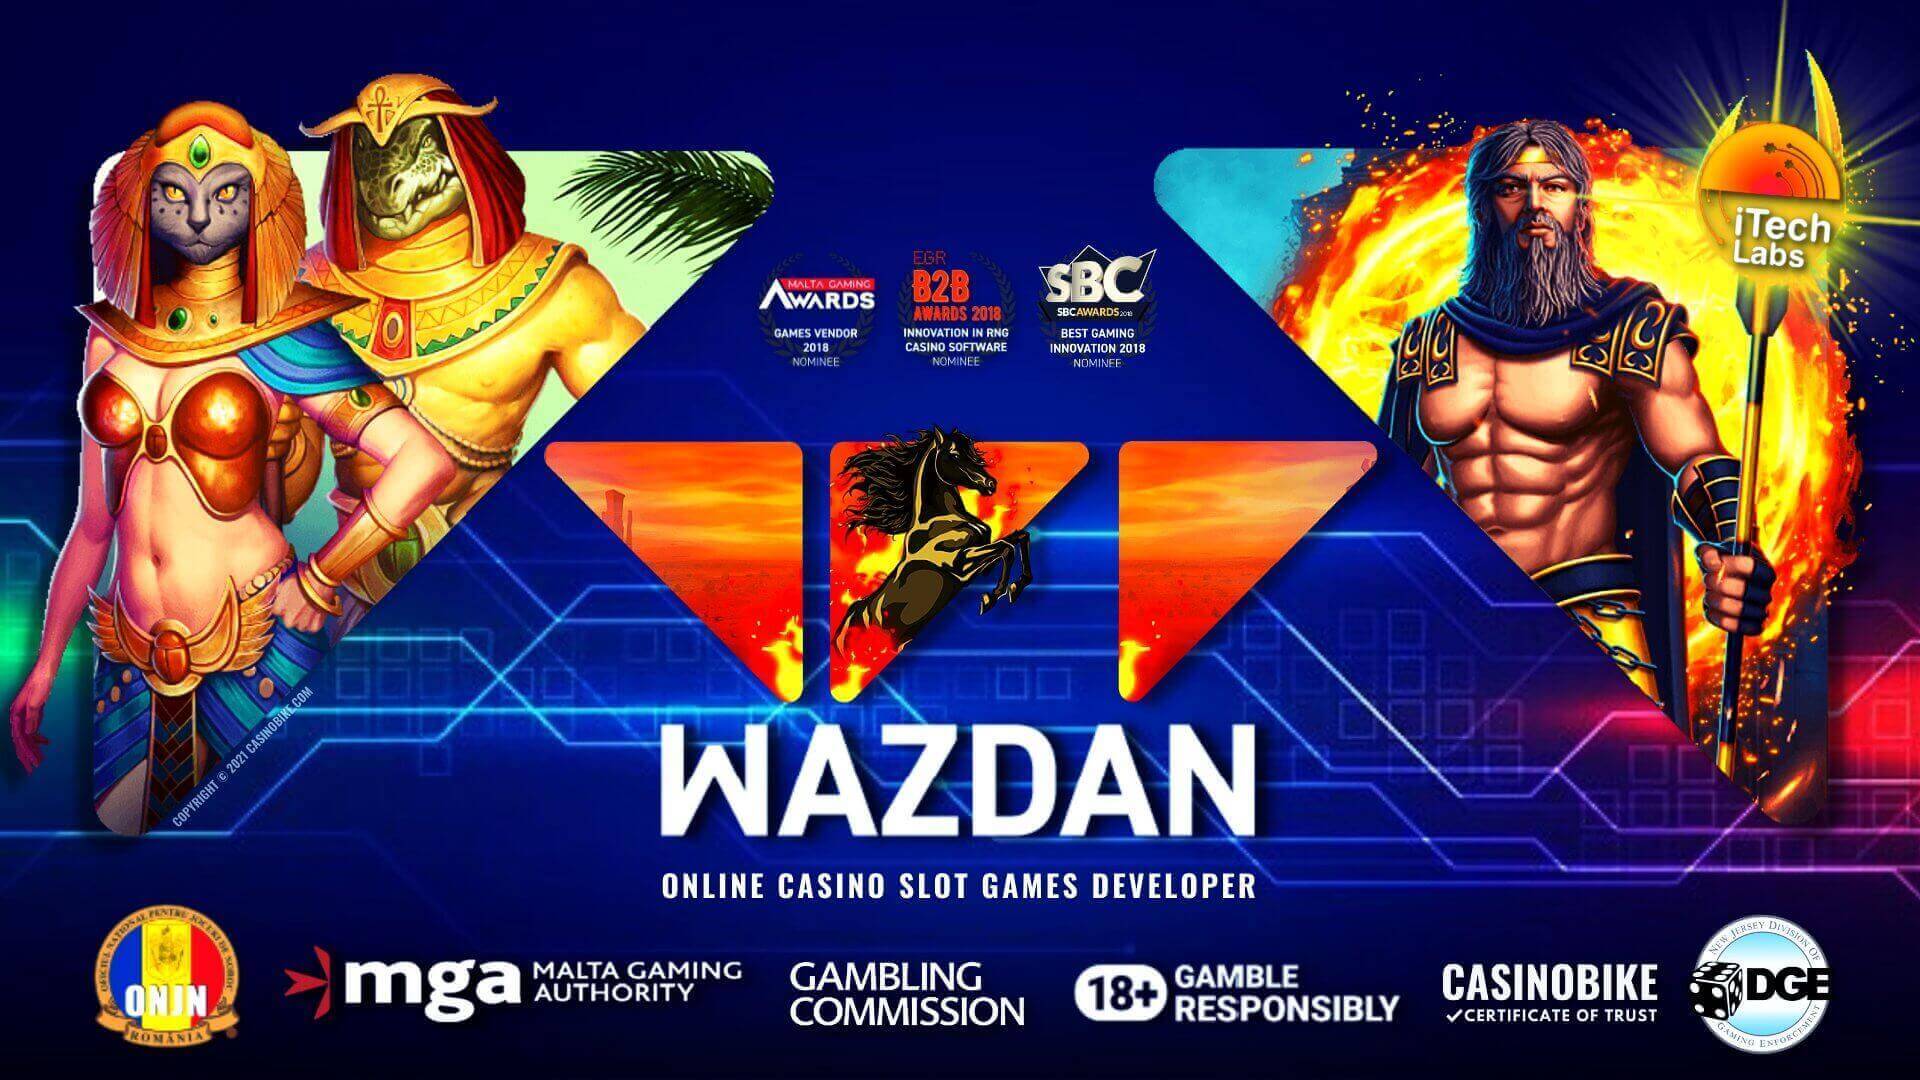 Wazdan Online Casino Slot Games Developer